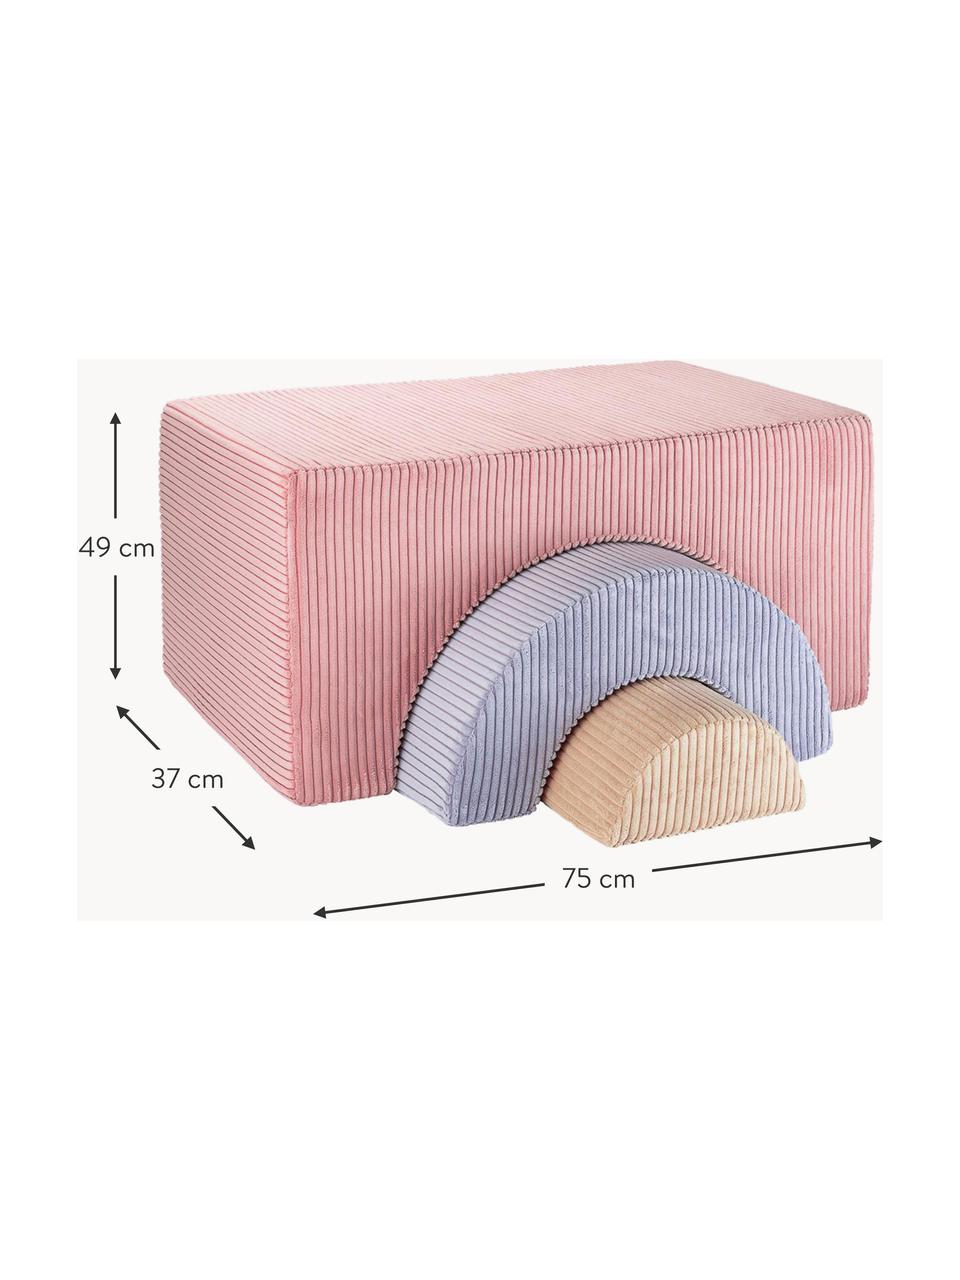 Set de pufs de pana Rainbow, 3 pzas., Funda: pana (100% poliéster) pro, Pana rosa palo, gris azulado, beige, An 75 x Al 49 cm